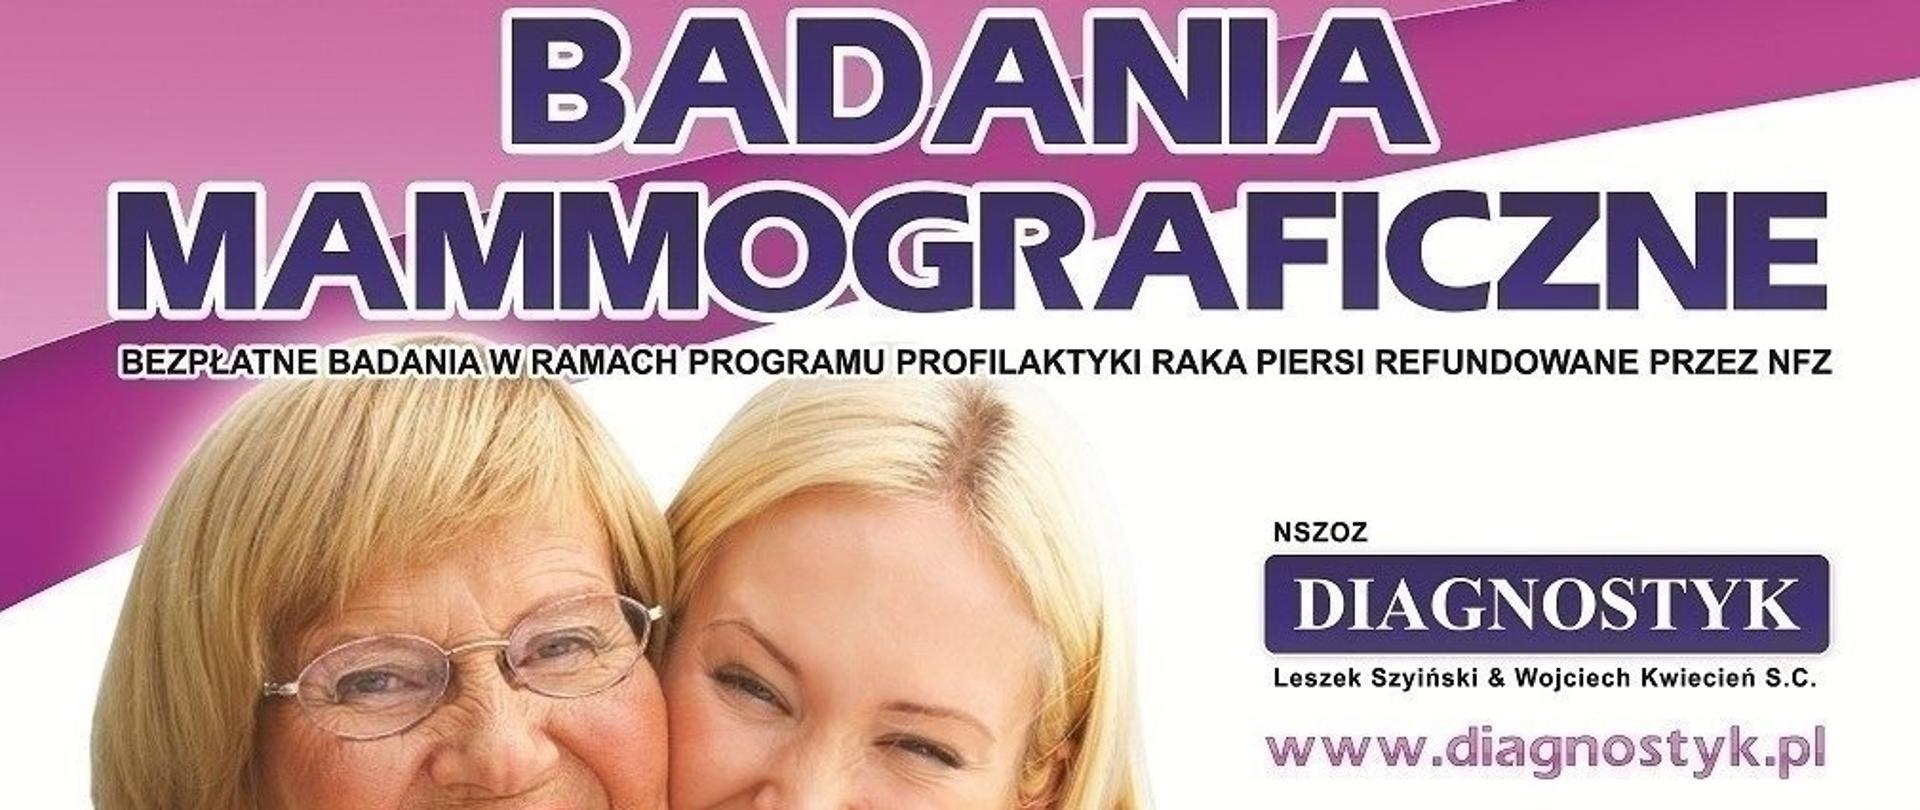 Badania mammograficzne plakat